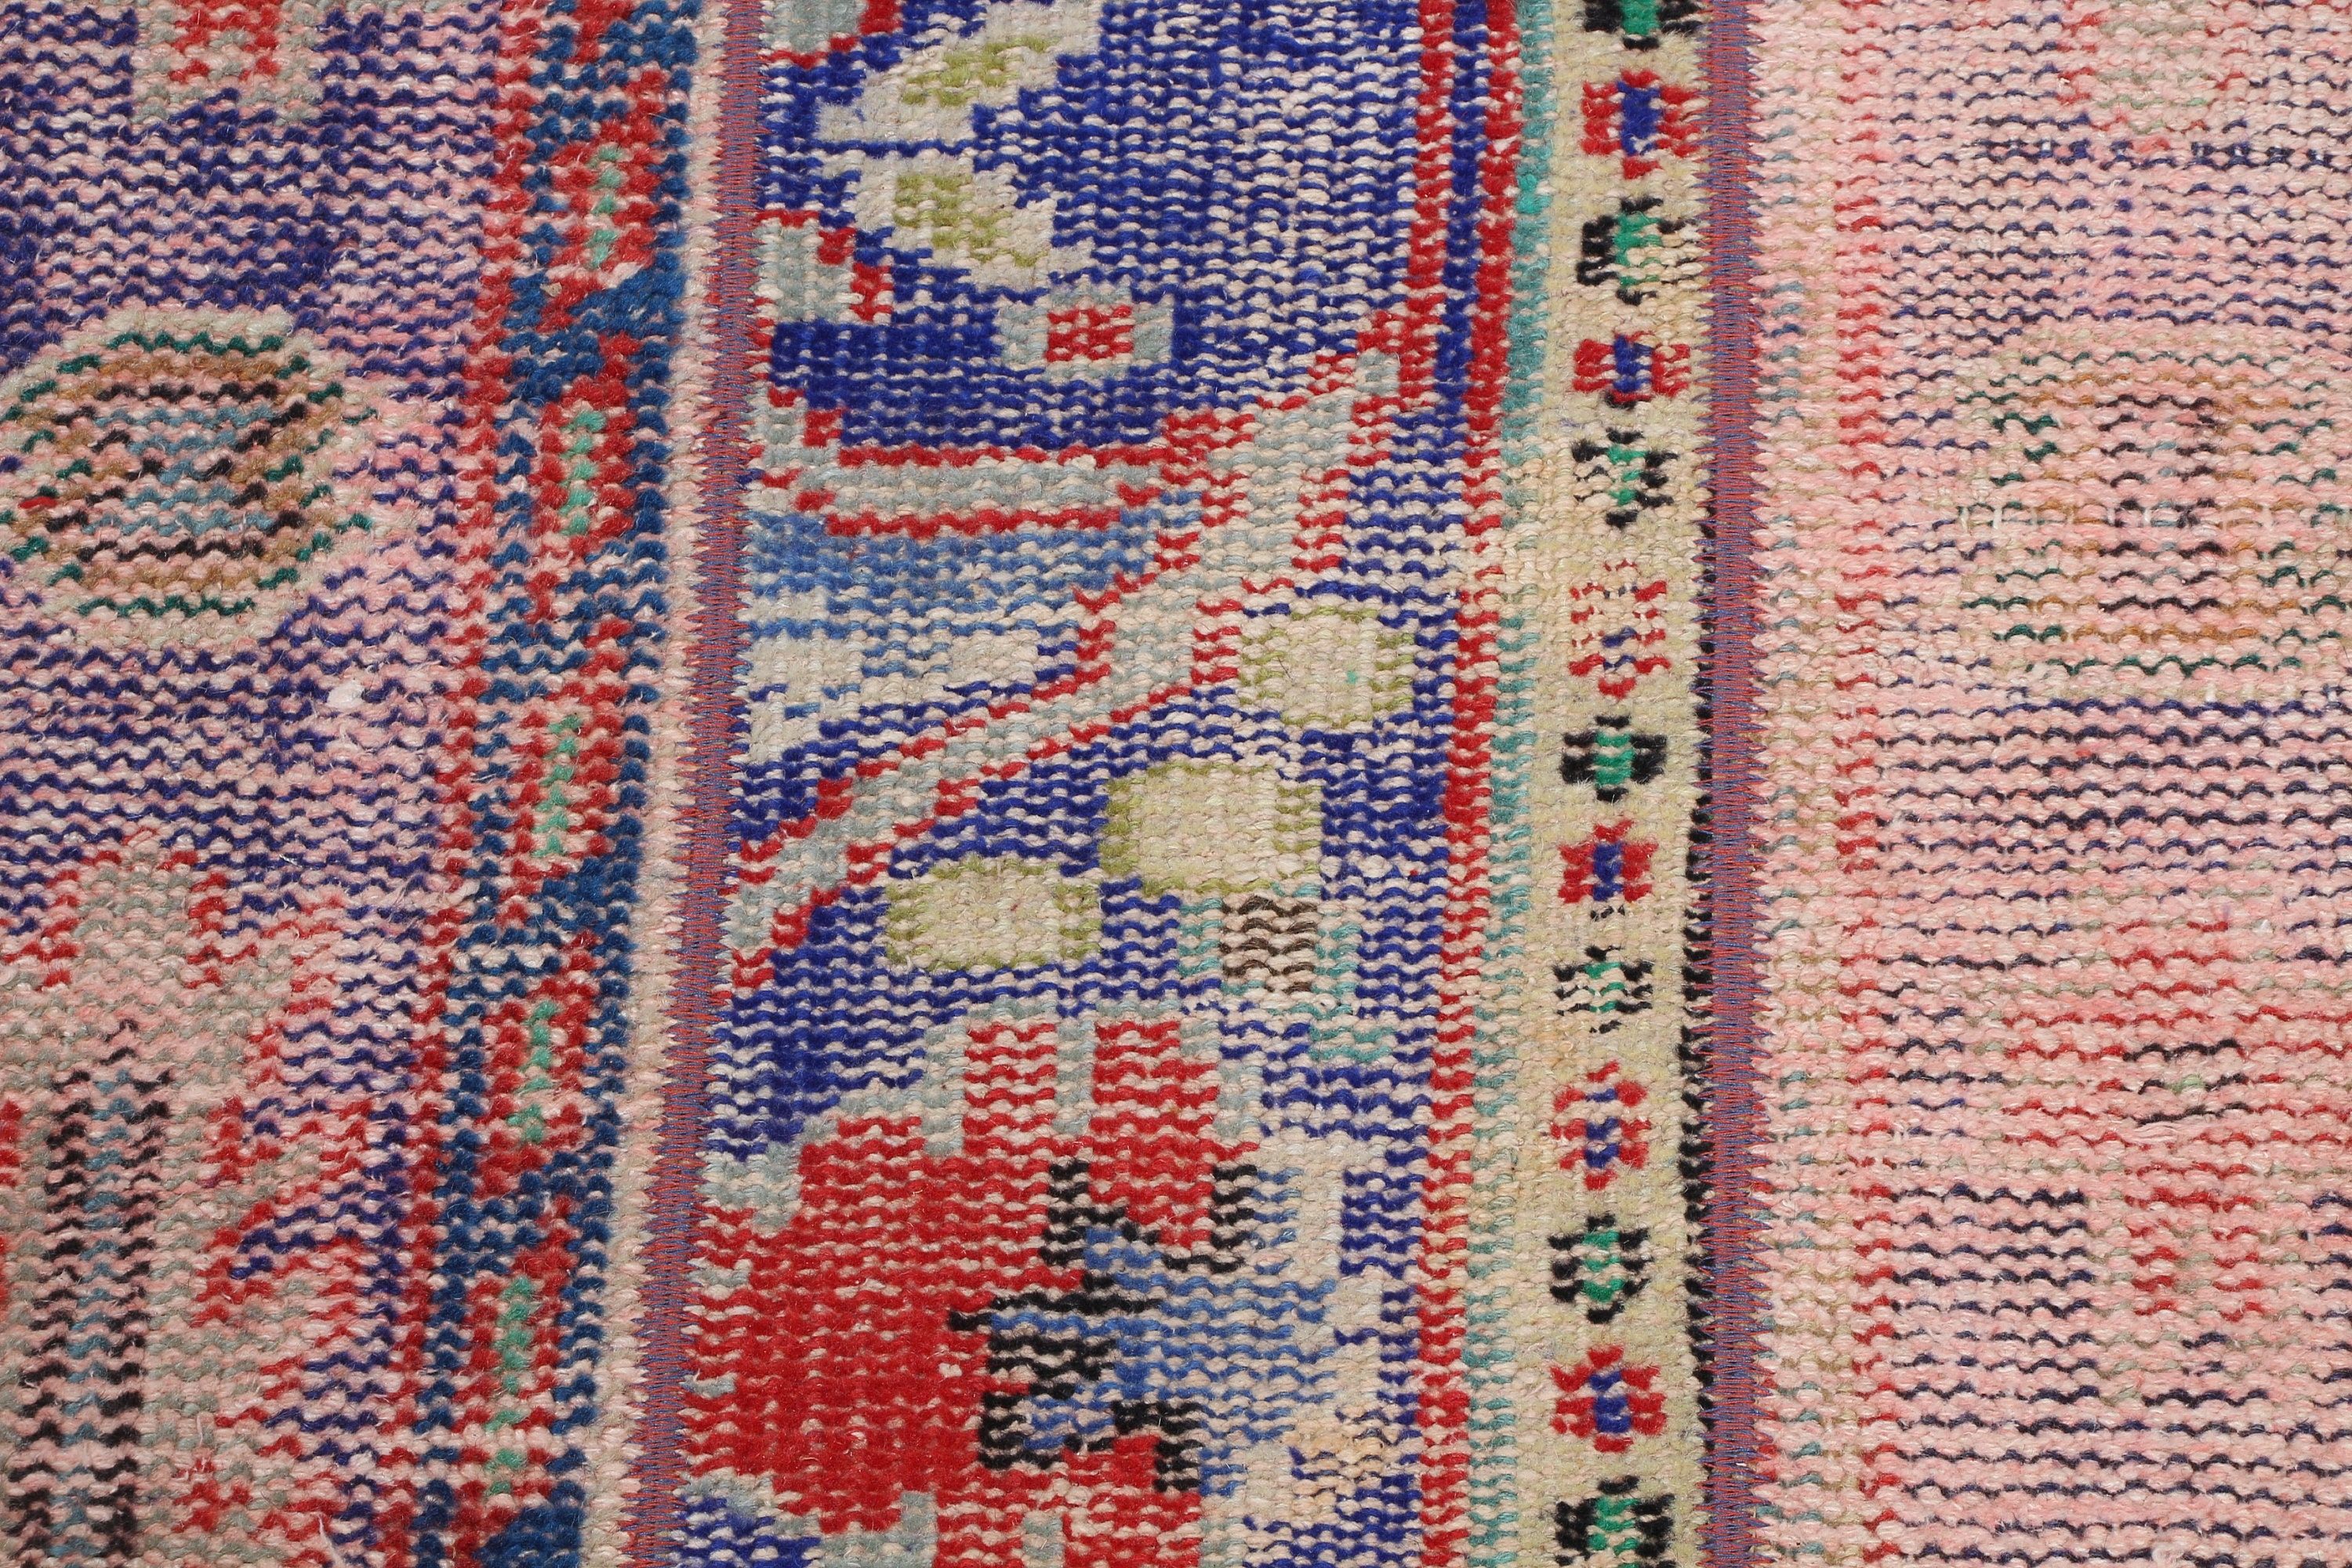 Nursery Rug, Kitchen Rugs, Blue Cool Rugs, Turkish Rugs, Anatolian Rug, Rugs for Nursery, Moroccan Rugs, Vintage Rugs, 2x2.6 ft Small Rug